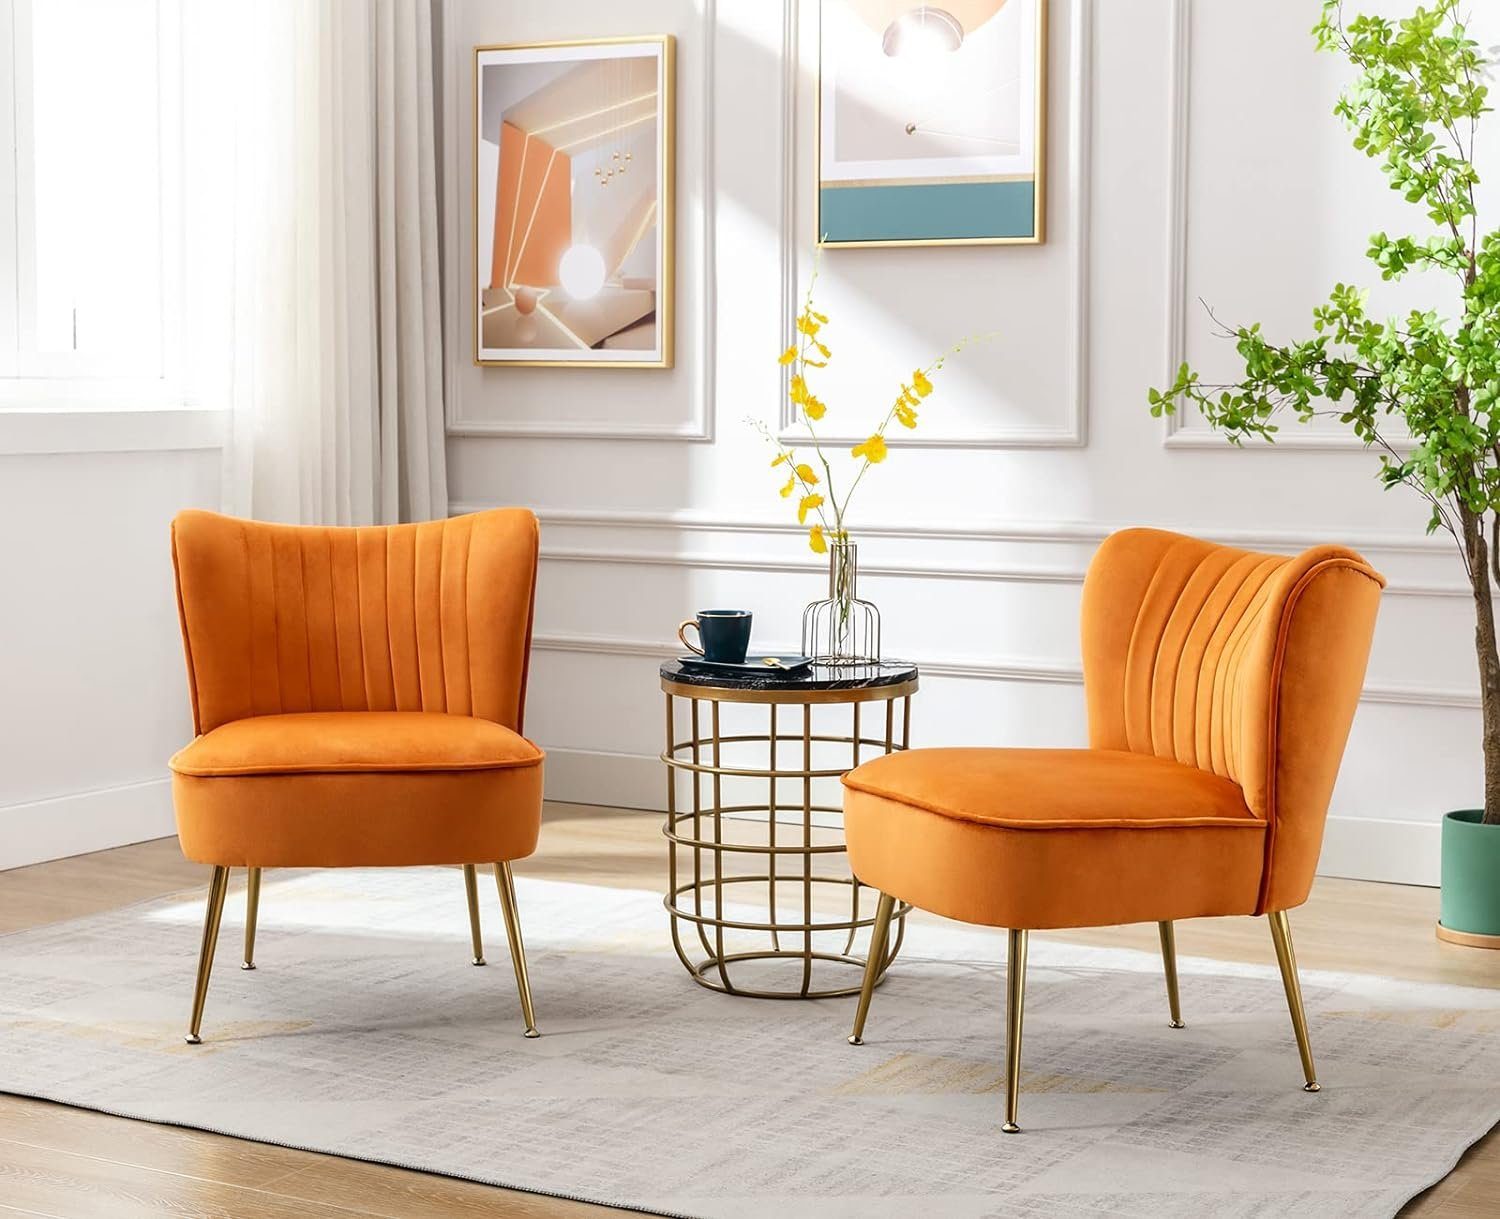 WAHSON OFFICE CHAIRS Geplosterter Loungesessel Sessel Wohnzimmer Ohrensessel Orange moderner